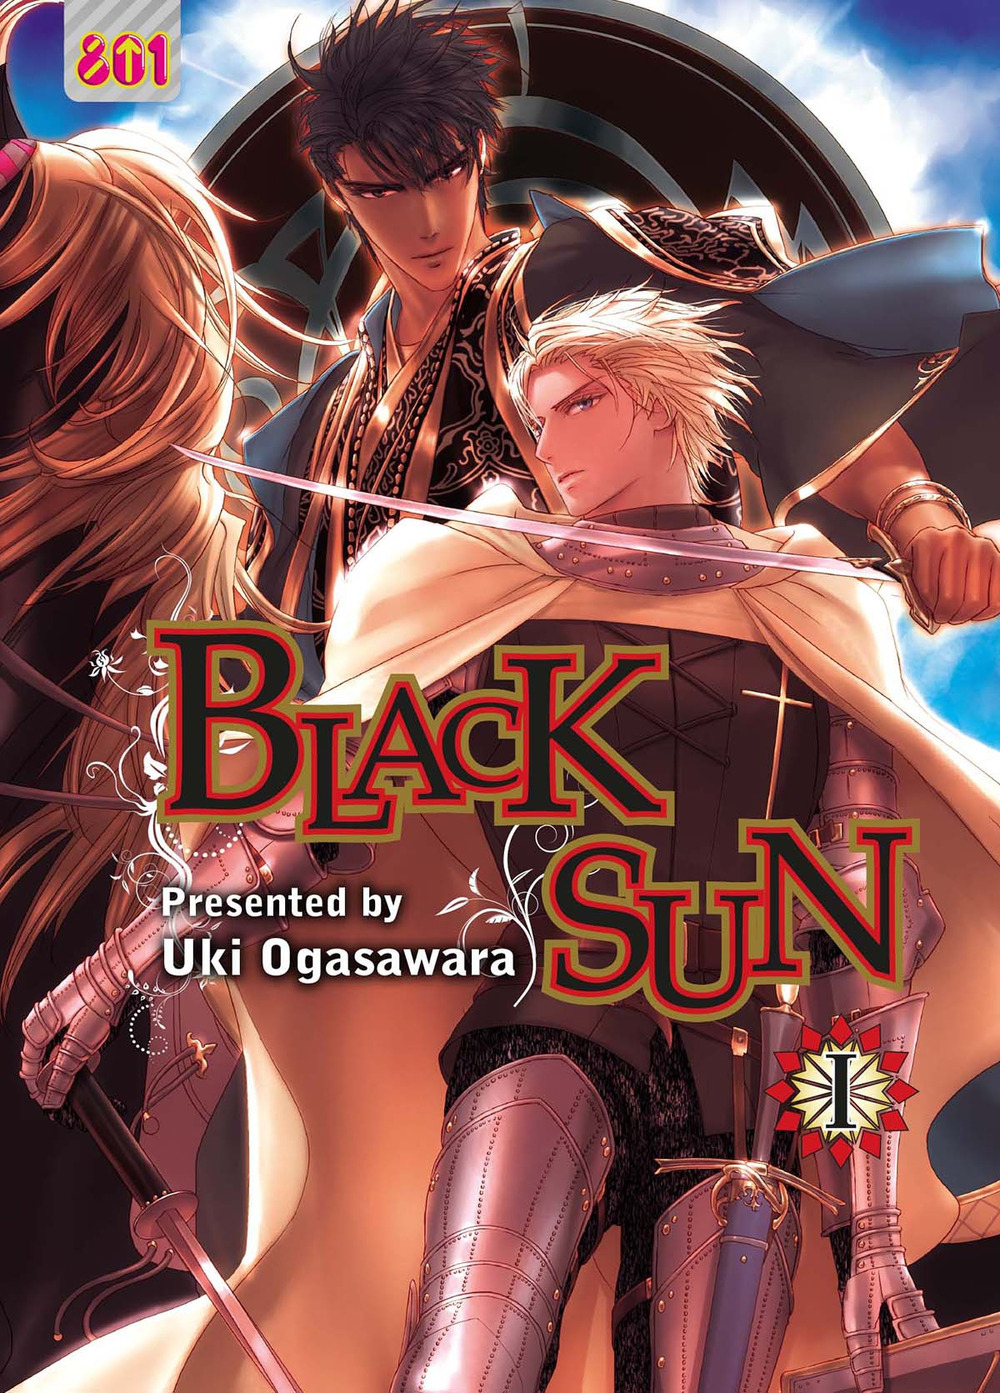 Black Sun. Vol. 1